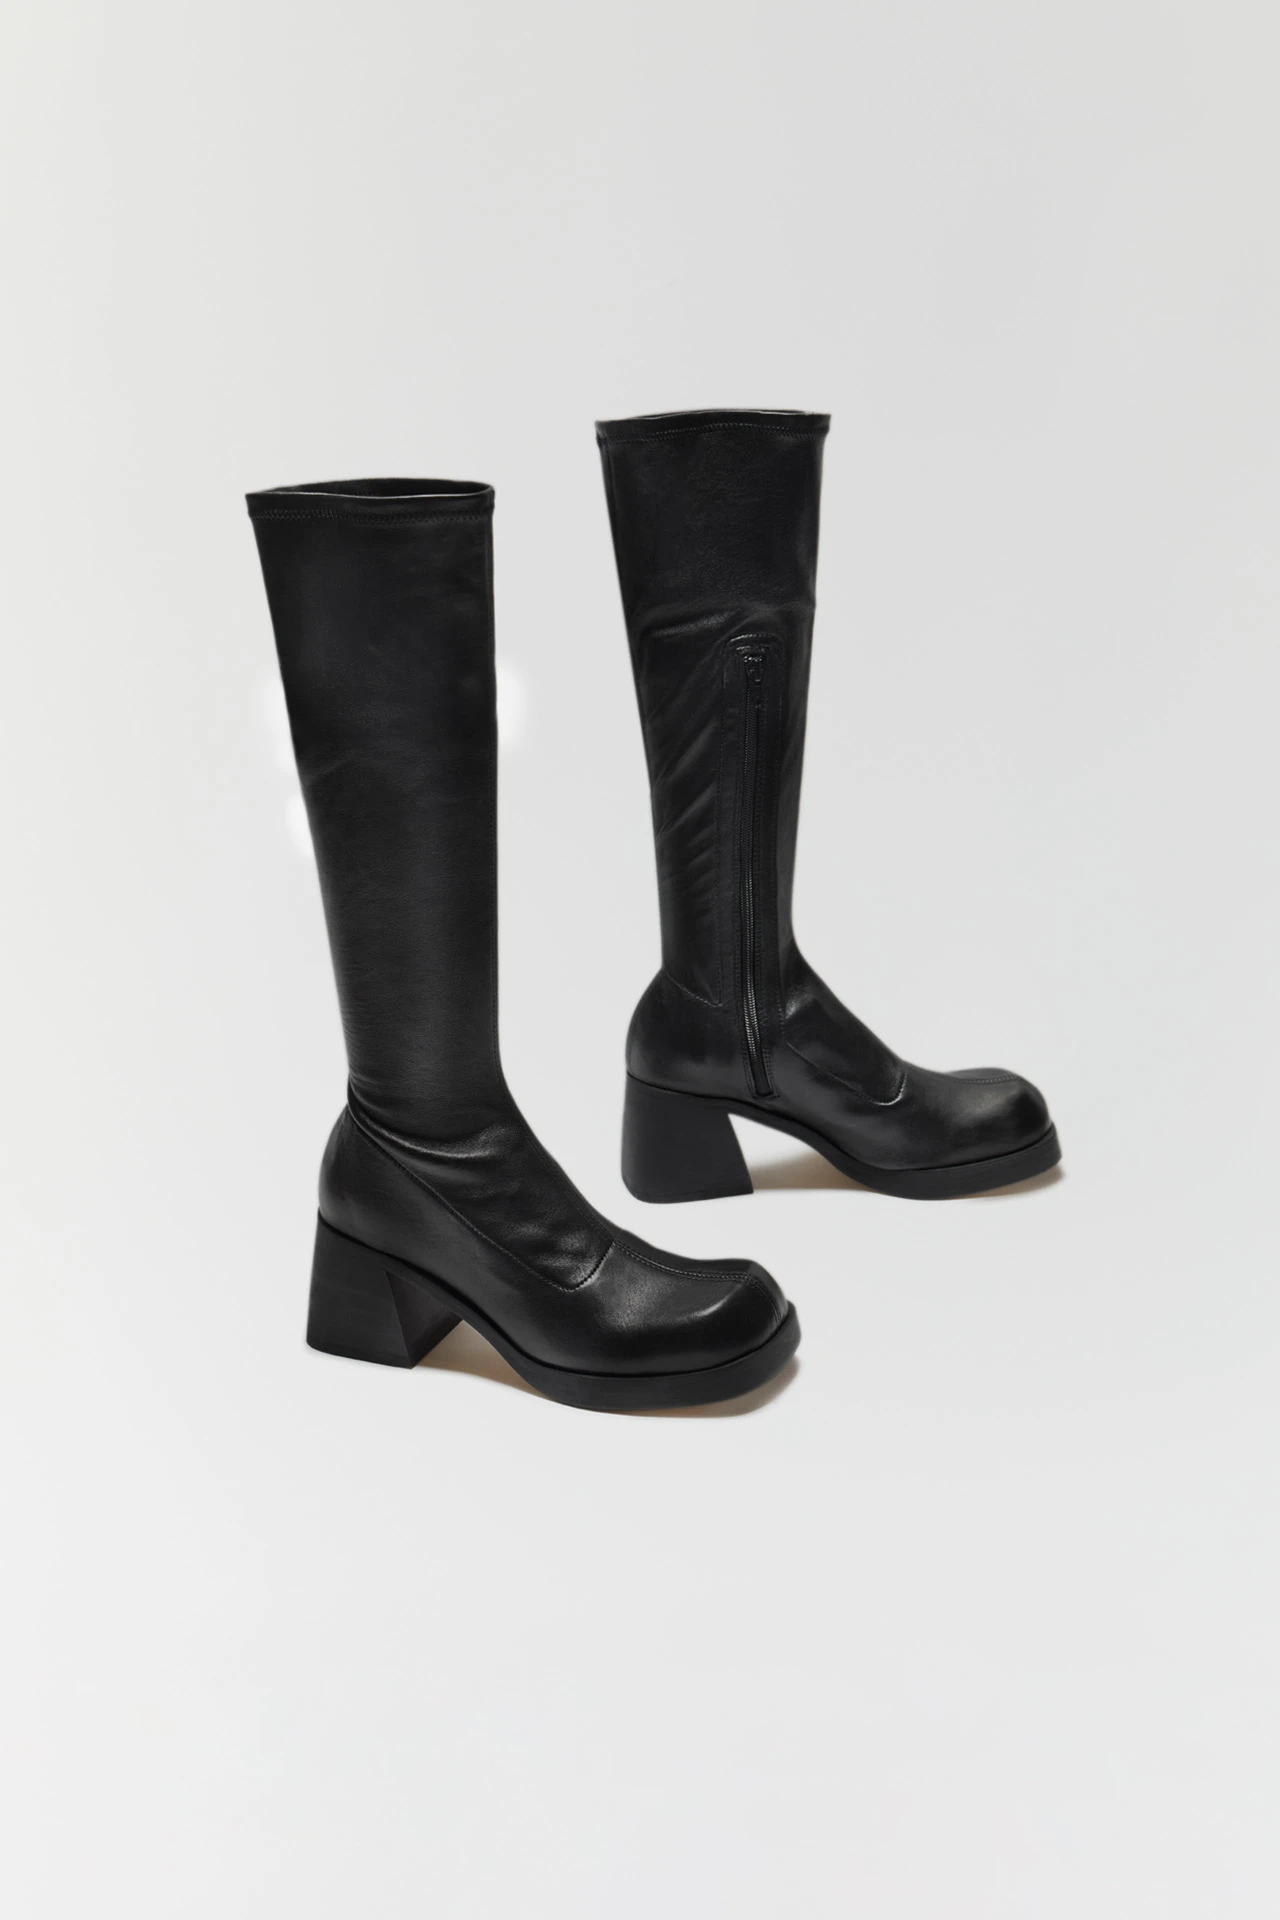 miista-hedy-black-stretch-nappa-boots-2